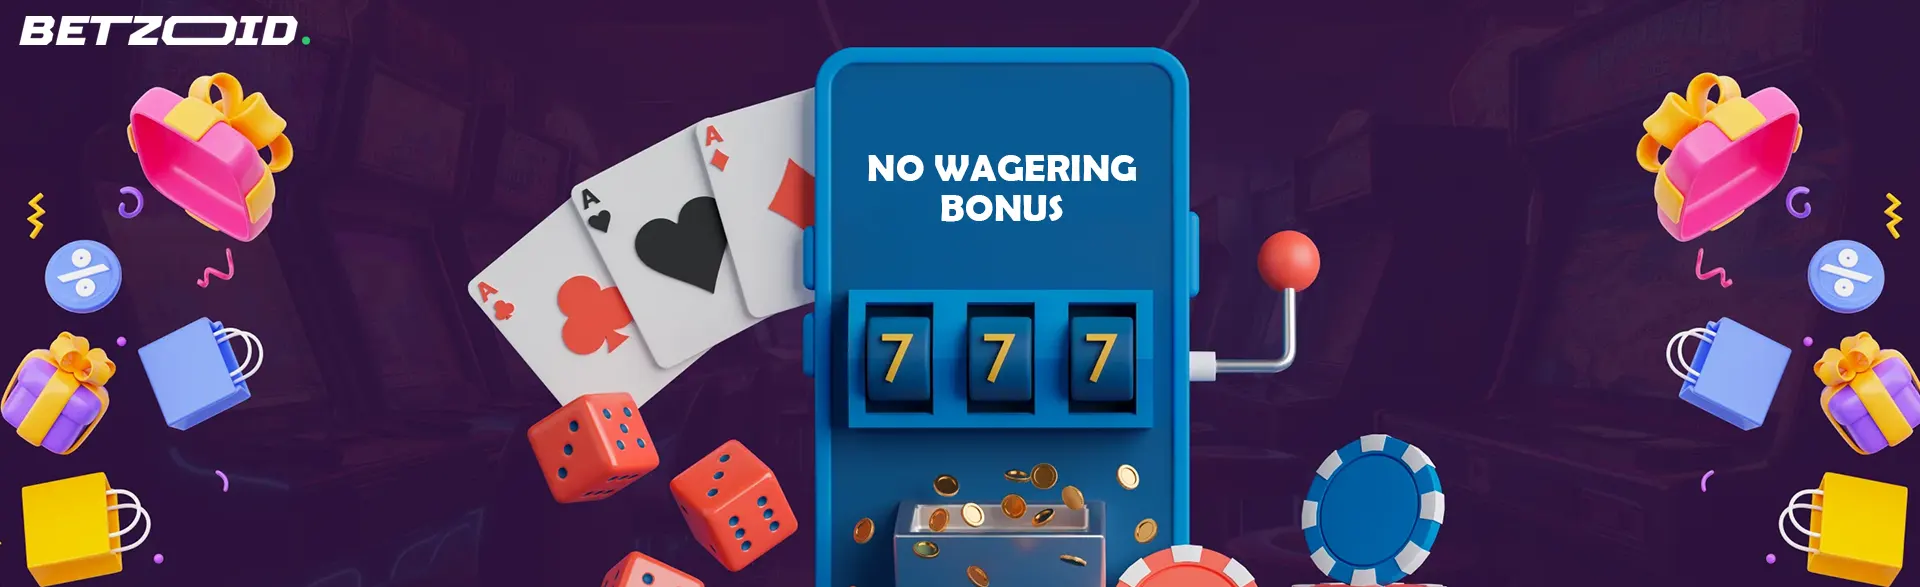 Slot machine graphic featuring 'No Wagering Bonus' and casino symbols, highlighting wager-free deposit bonuses in Canada.